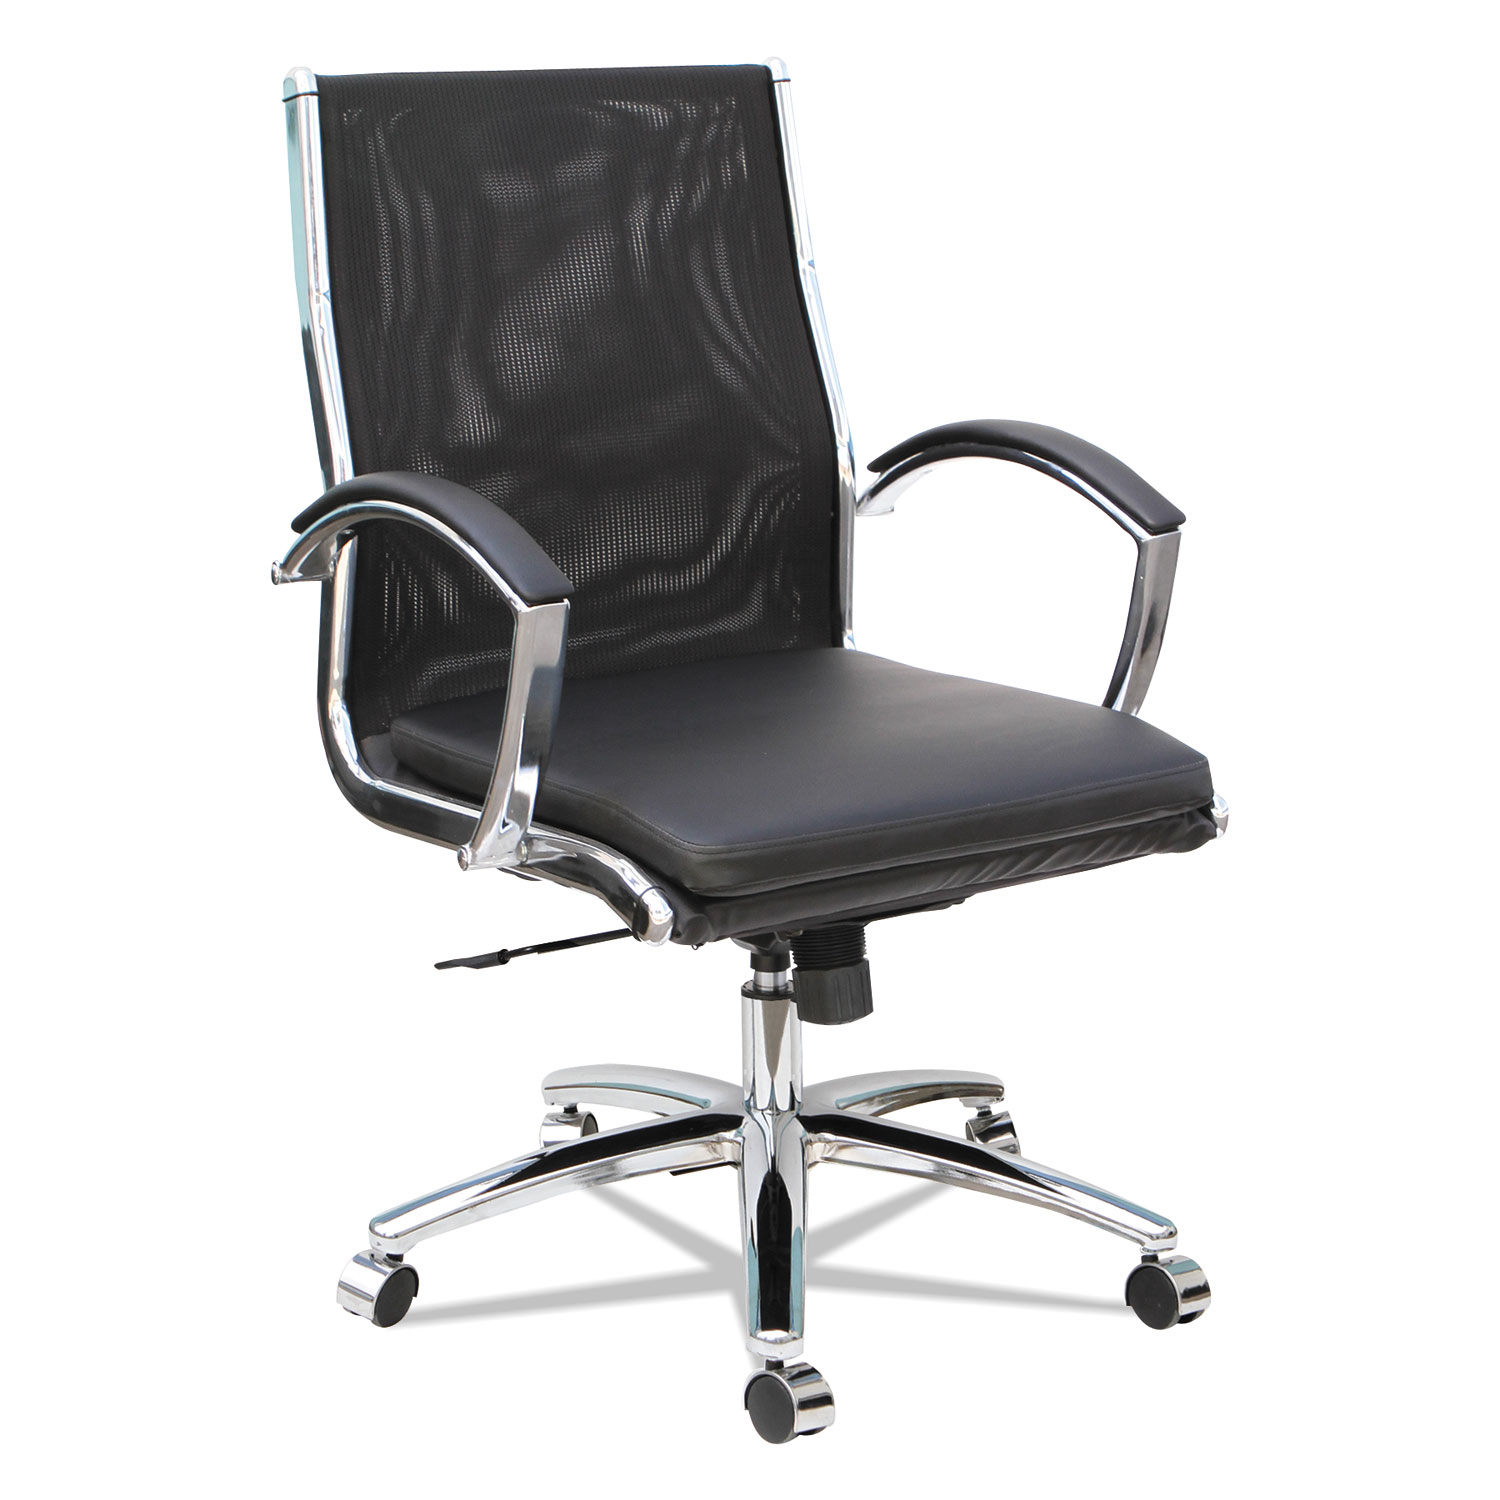  Alera ALENR4218 Alera Neratoli Mid-Back Slim Profile Chair, Supports up to 275 lbs., Black Seat/Black Back, Chrome Base (ALENR4218) 